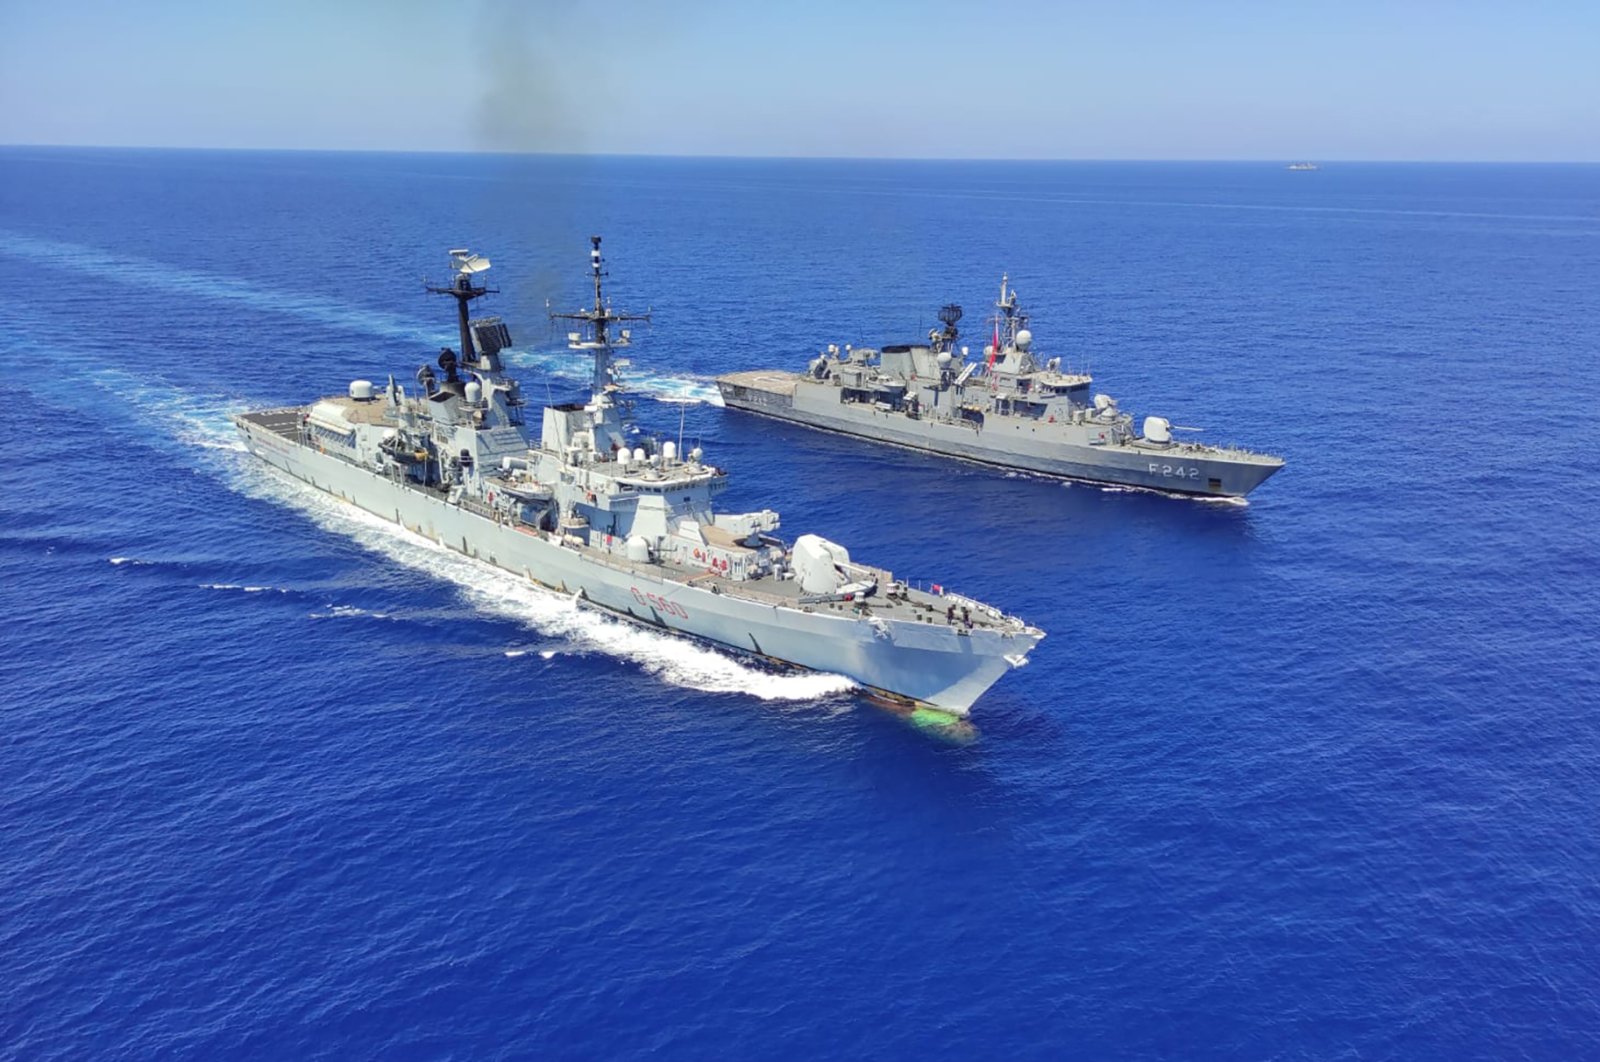 Italian destroyer ITS Durand De La Penne, left, along with Turkish frigates TCG Göksu and TCG Fatih conduct maritime trainings in the Eastern Mediterranean, Aug. 25, 2020. (AP Photo)